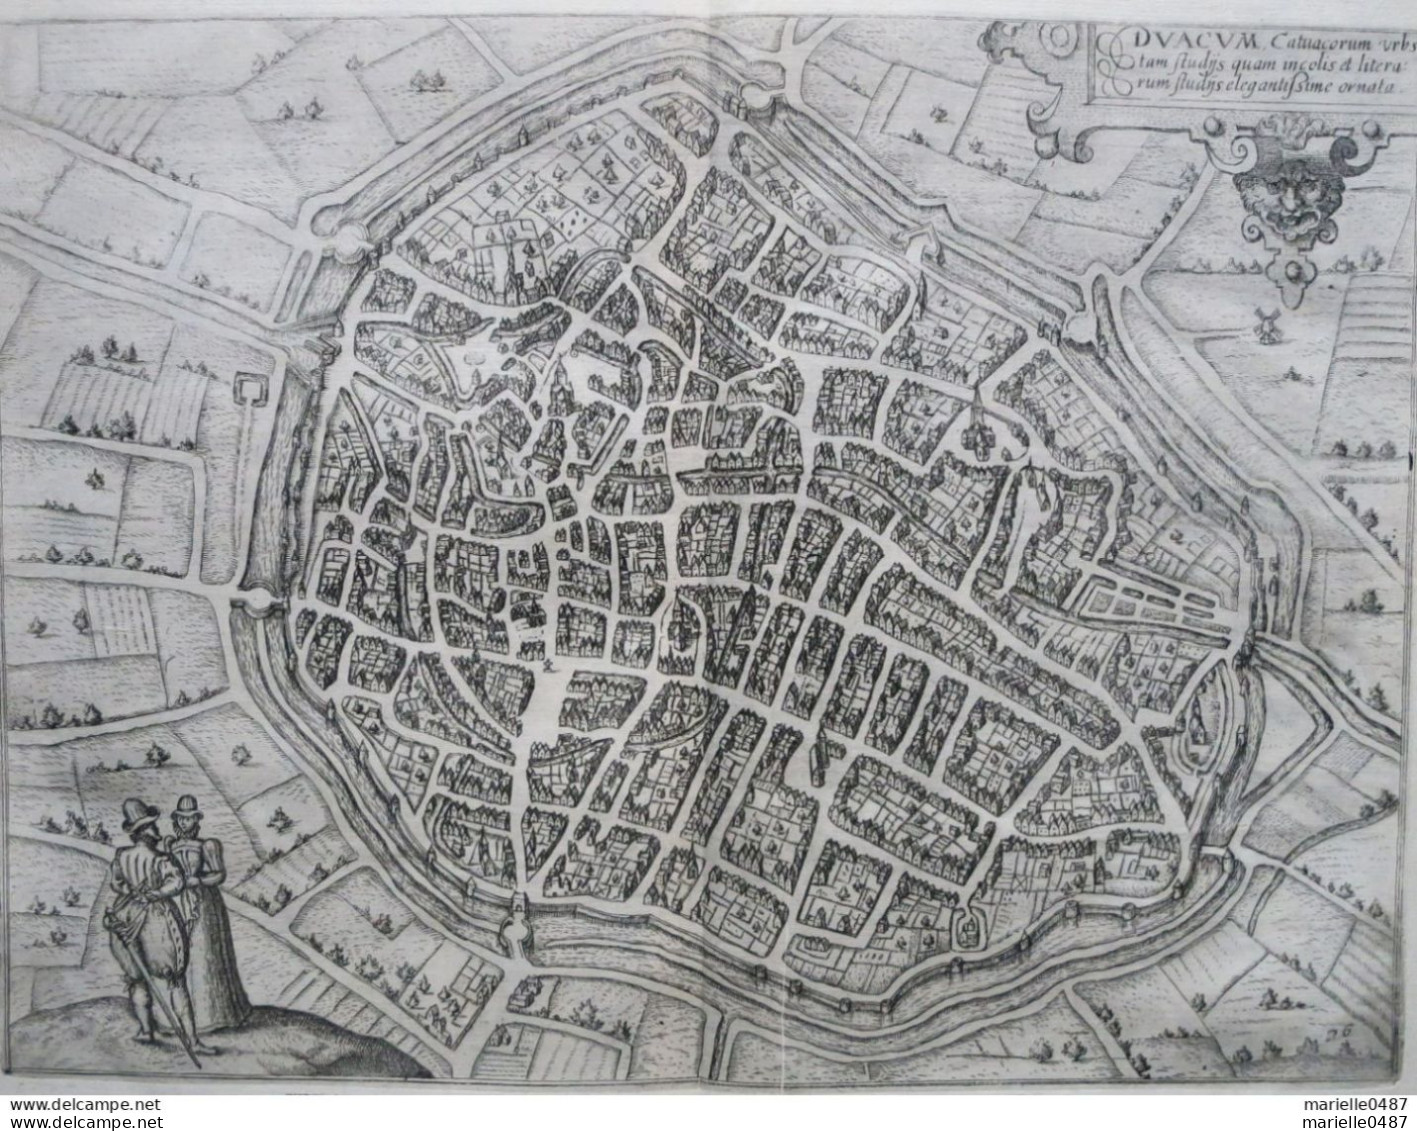 GUICCIARDINI - Plan De La Ville De Douai 1567 - Carte Geographique